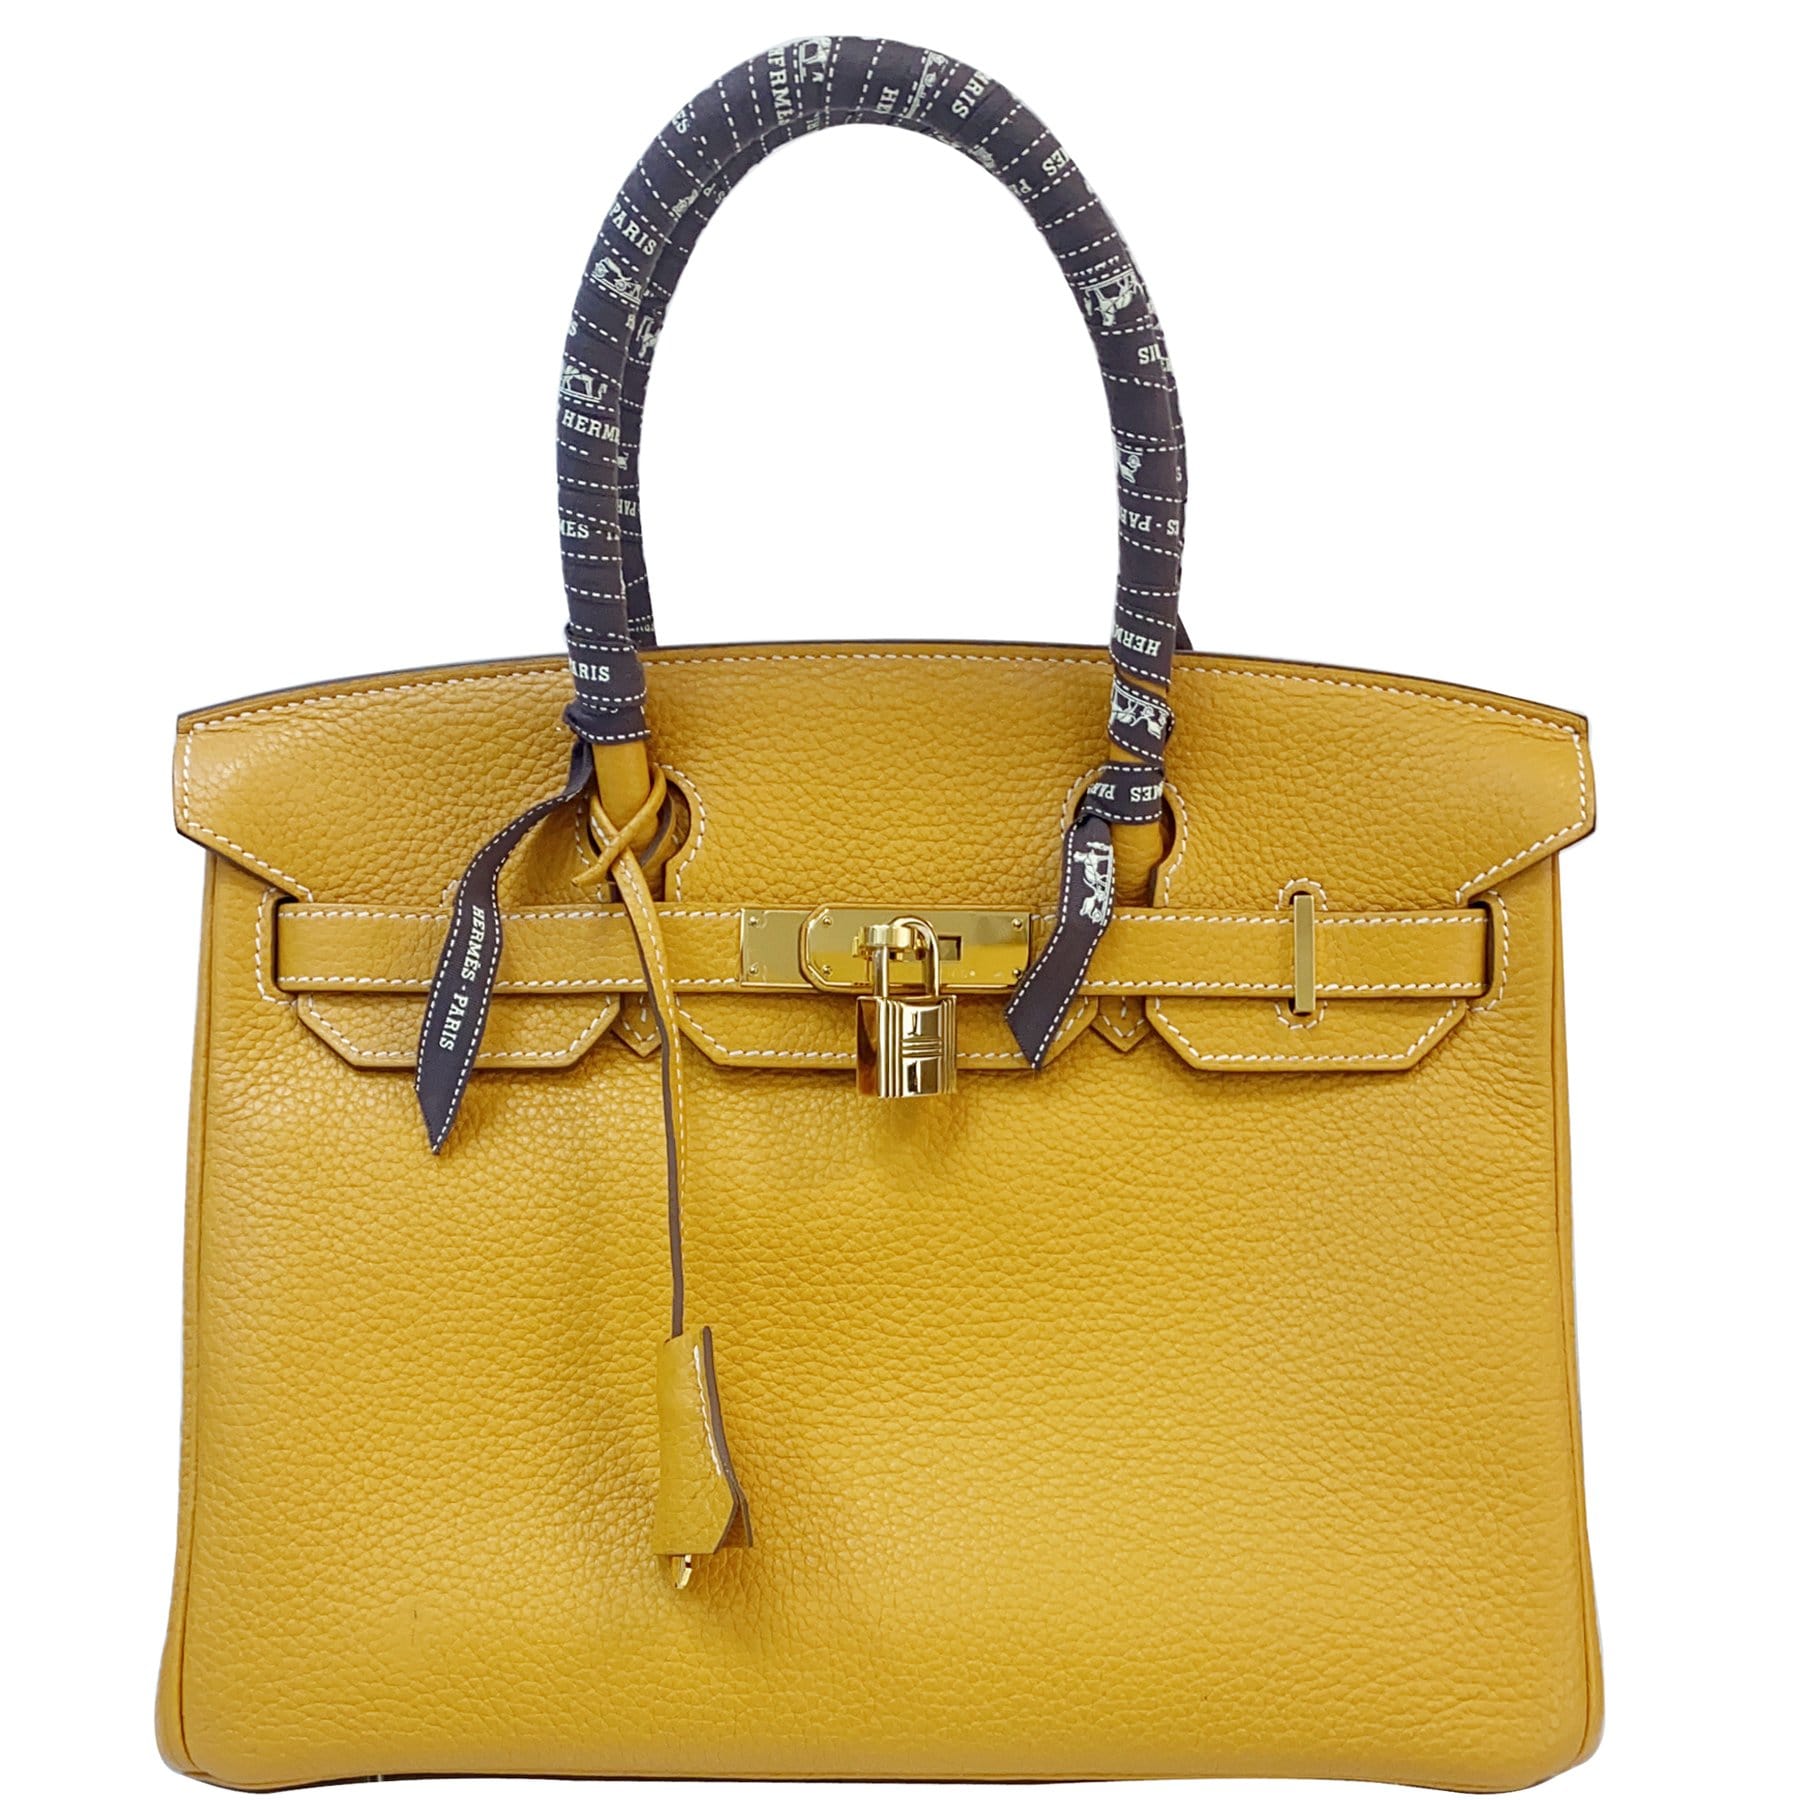 Brand New - Hermès Birkin 30 handbag in Black Togo leather, gold